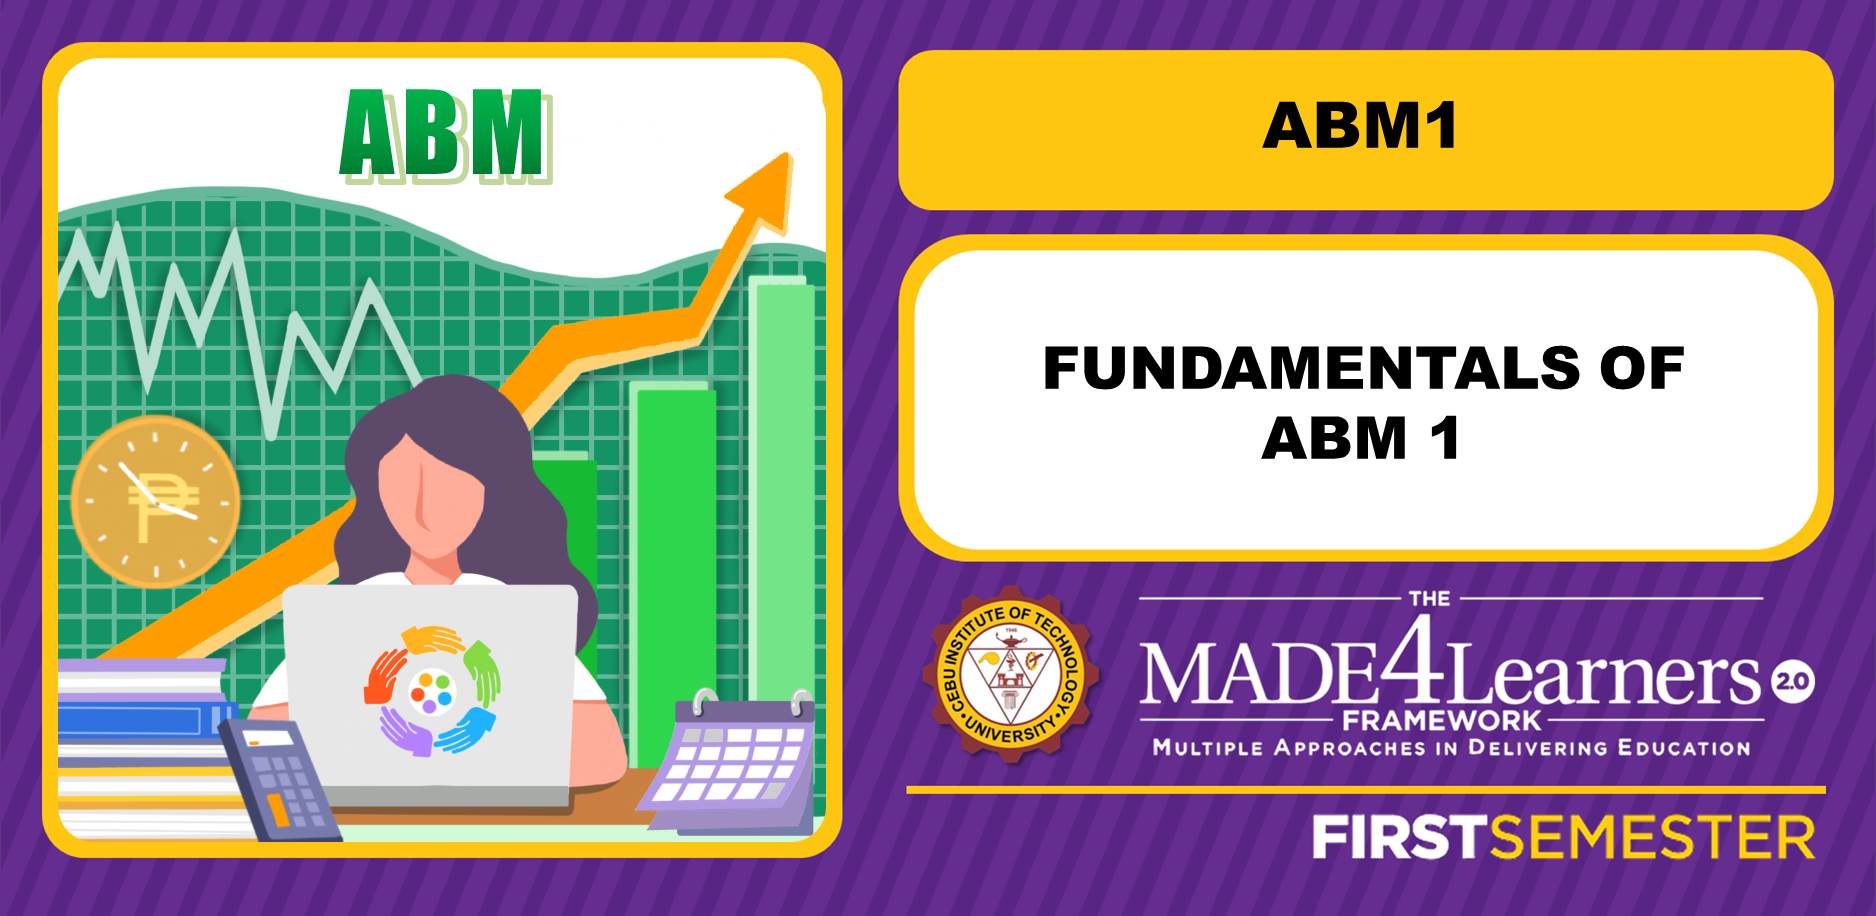 ABM1: Fundamentals of ABM